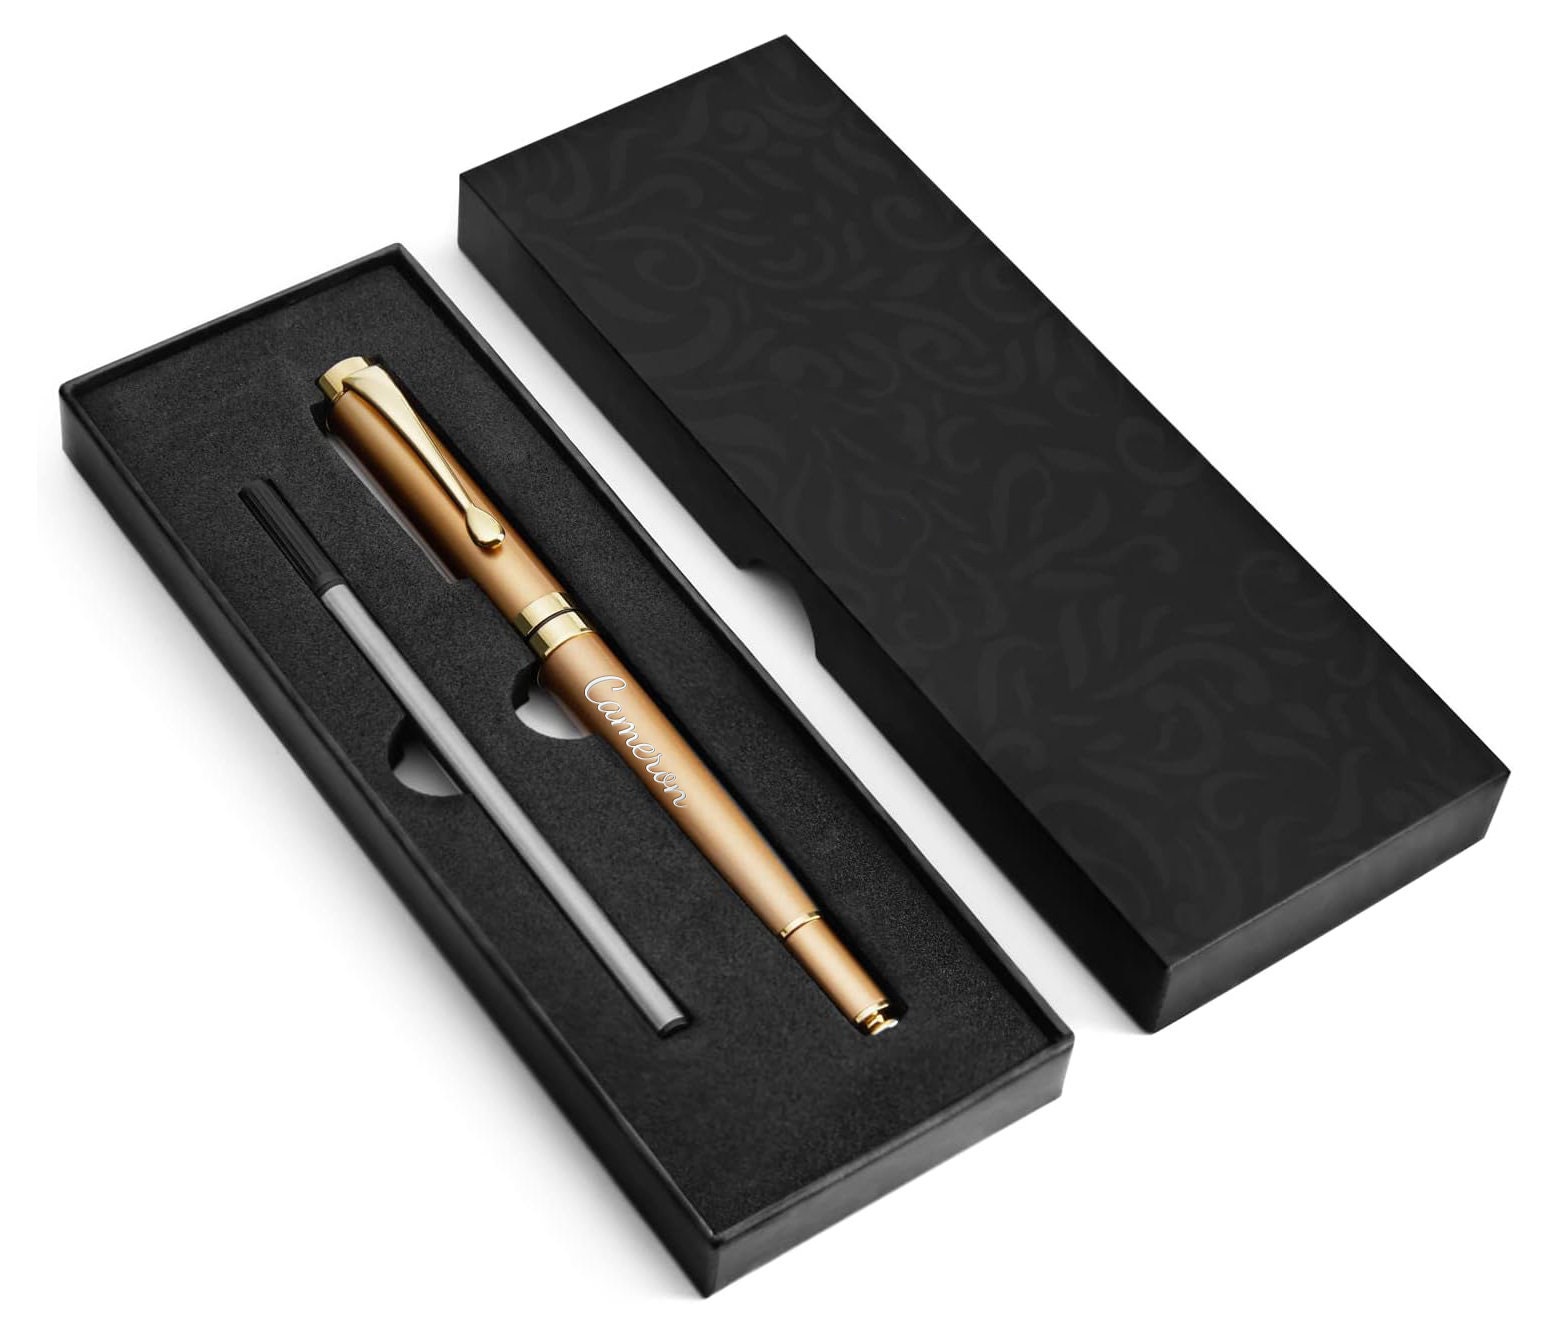 FMVV3H7 Unibene Gold Ballpoint Pens - Black Ink Medium Point 6 Pack, Cute Office  Supplies for Men Women, Nice Metallic Slim Pens Bulk